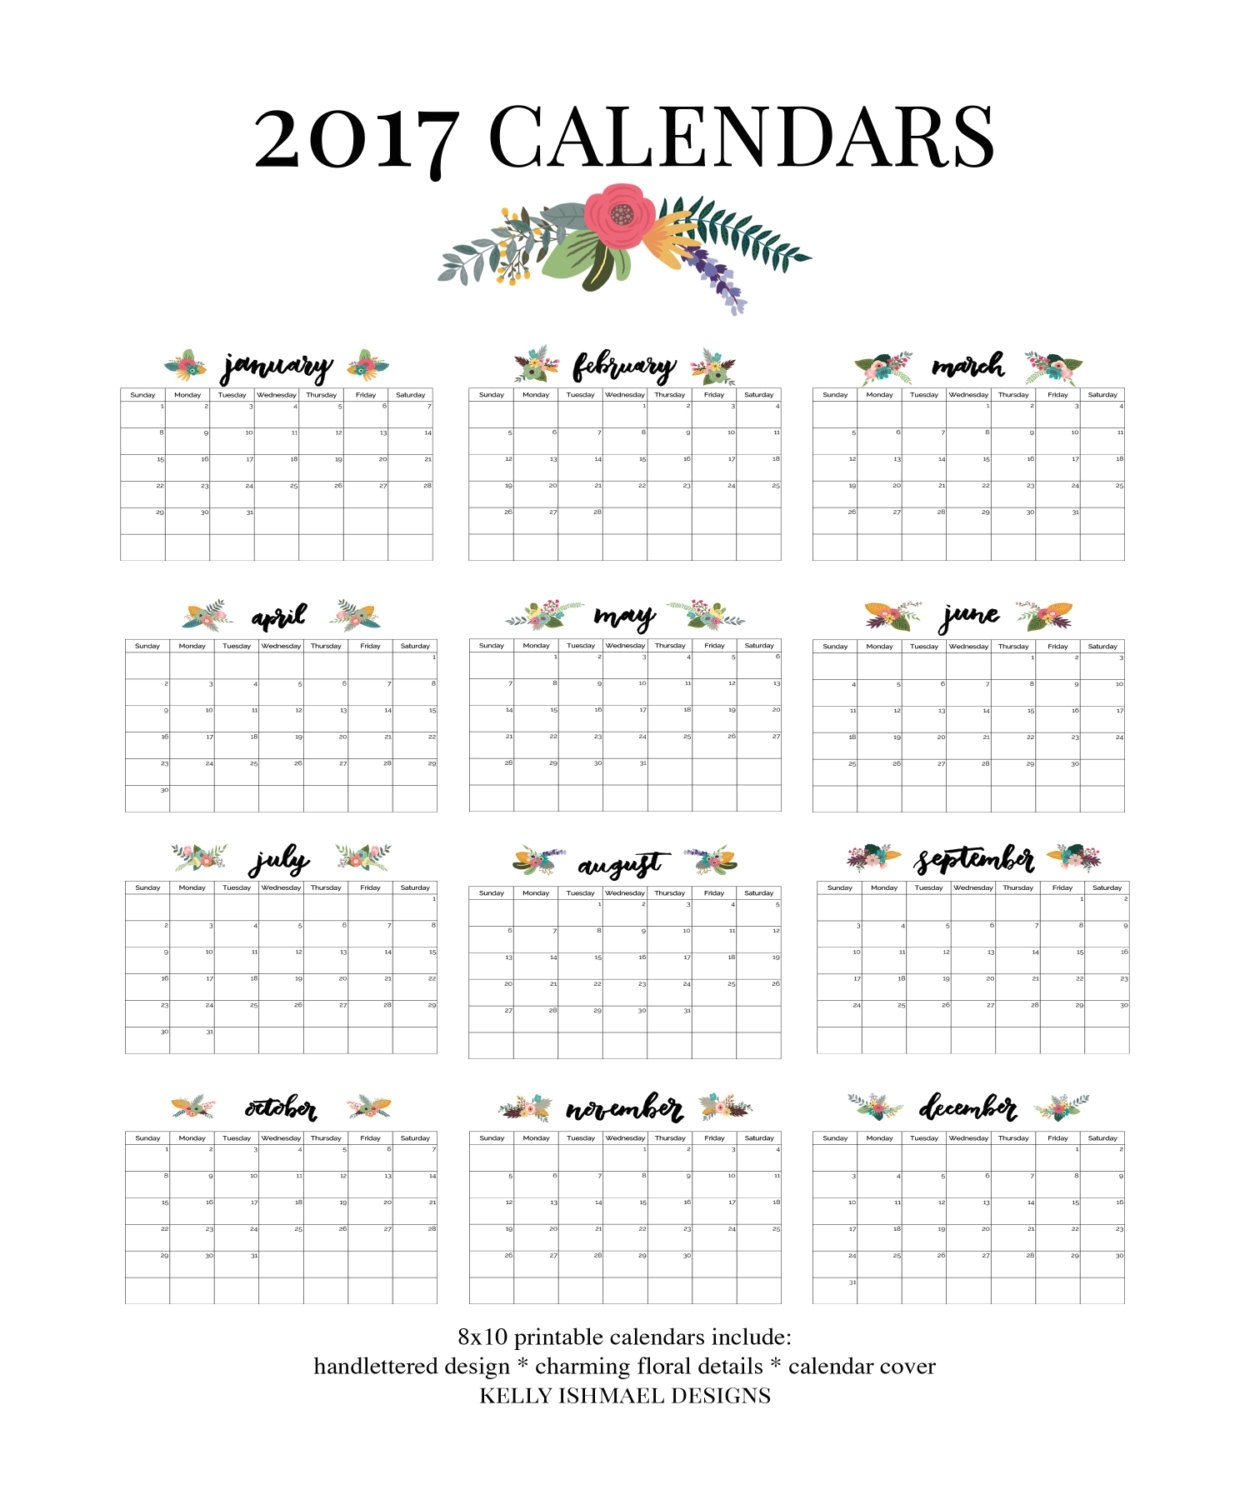 2017 calendar printable calendar 8x10